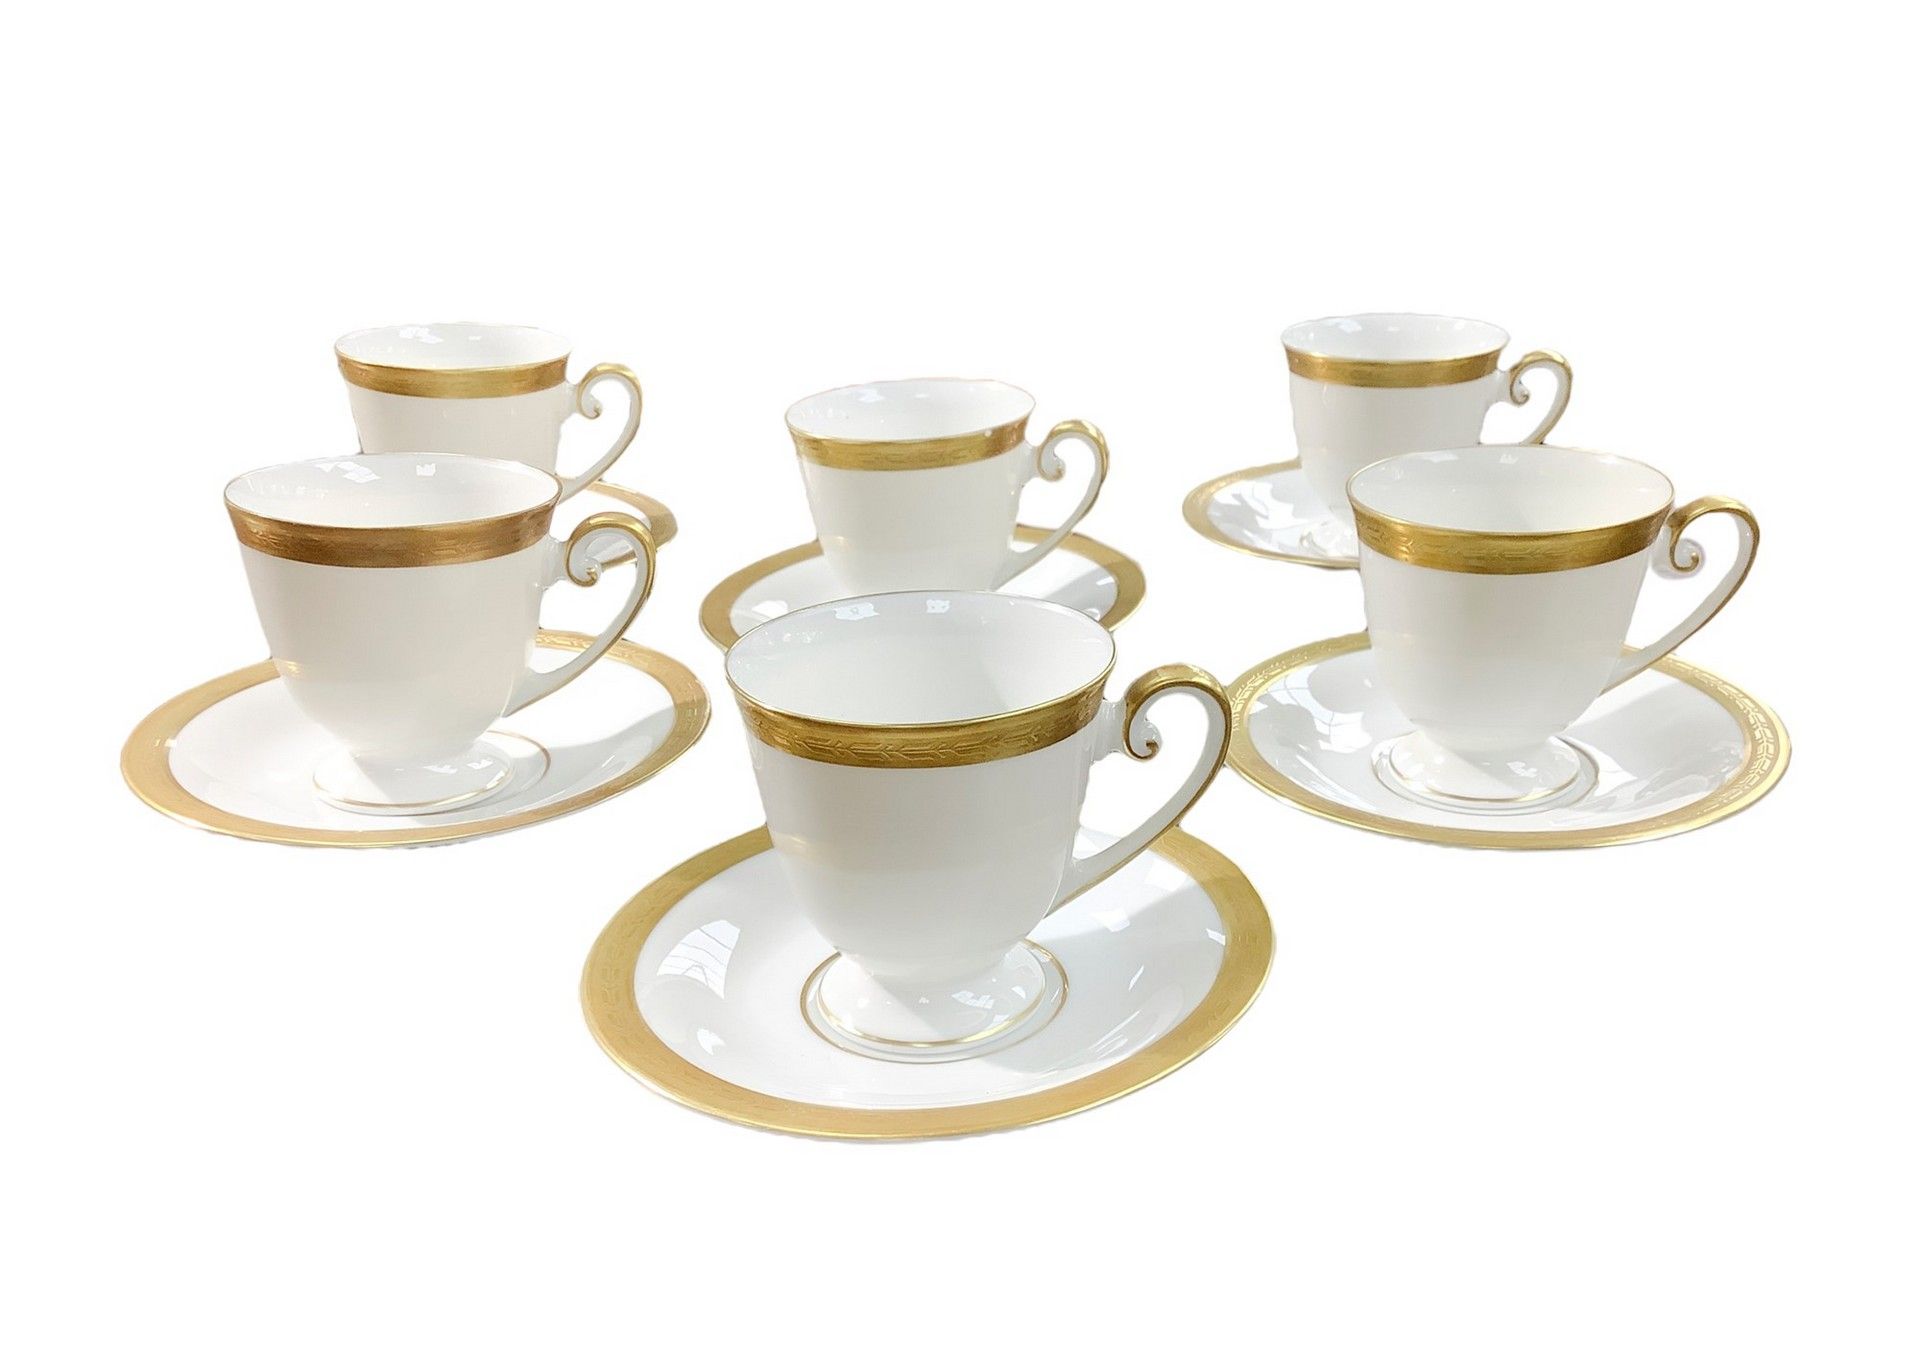 Null "德国Trschenreuth "咖啡杯服务 瓷器 瓷器，金边。由6个杯子，6个碟子组成（其中1个带旋转）。